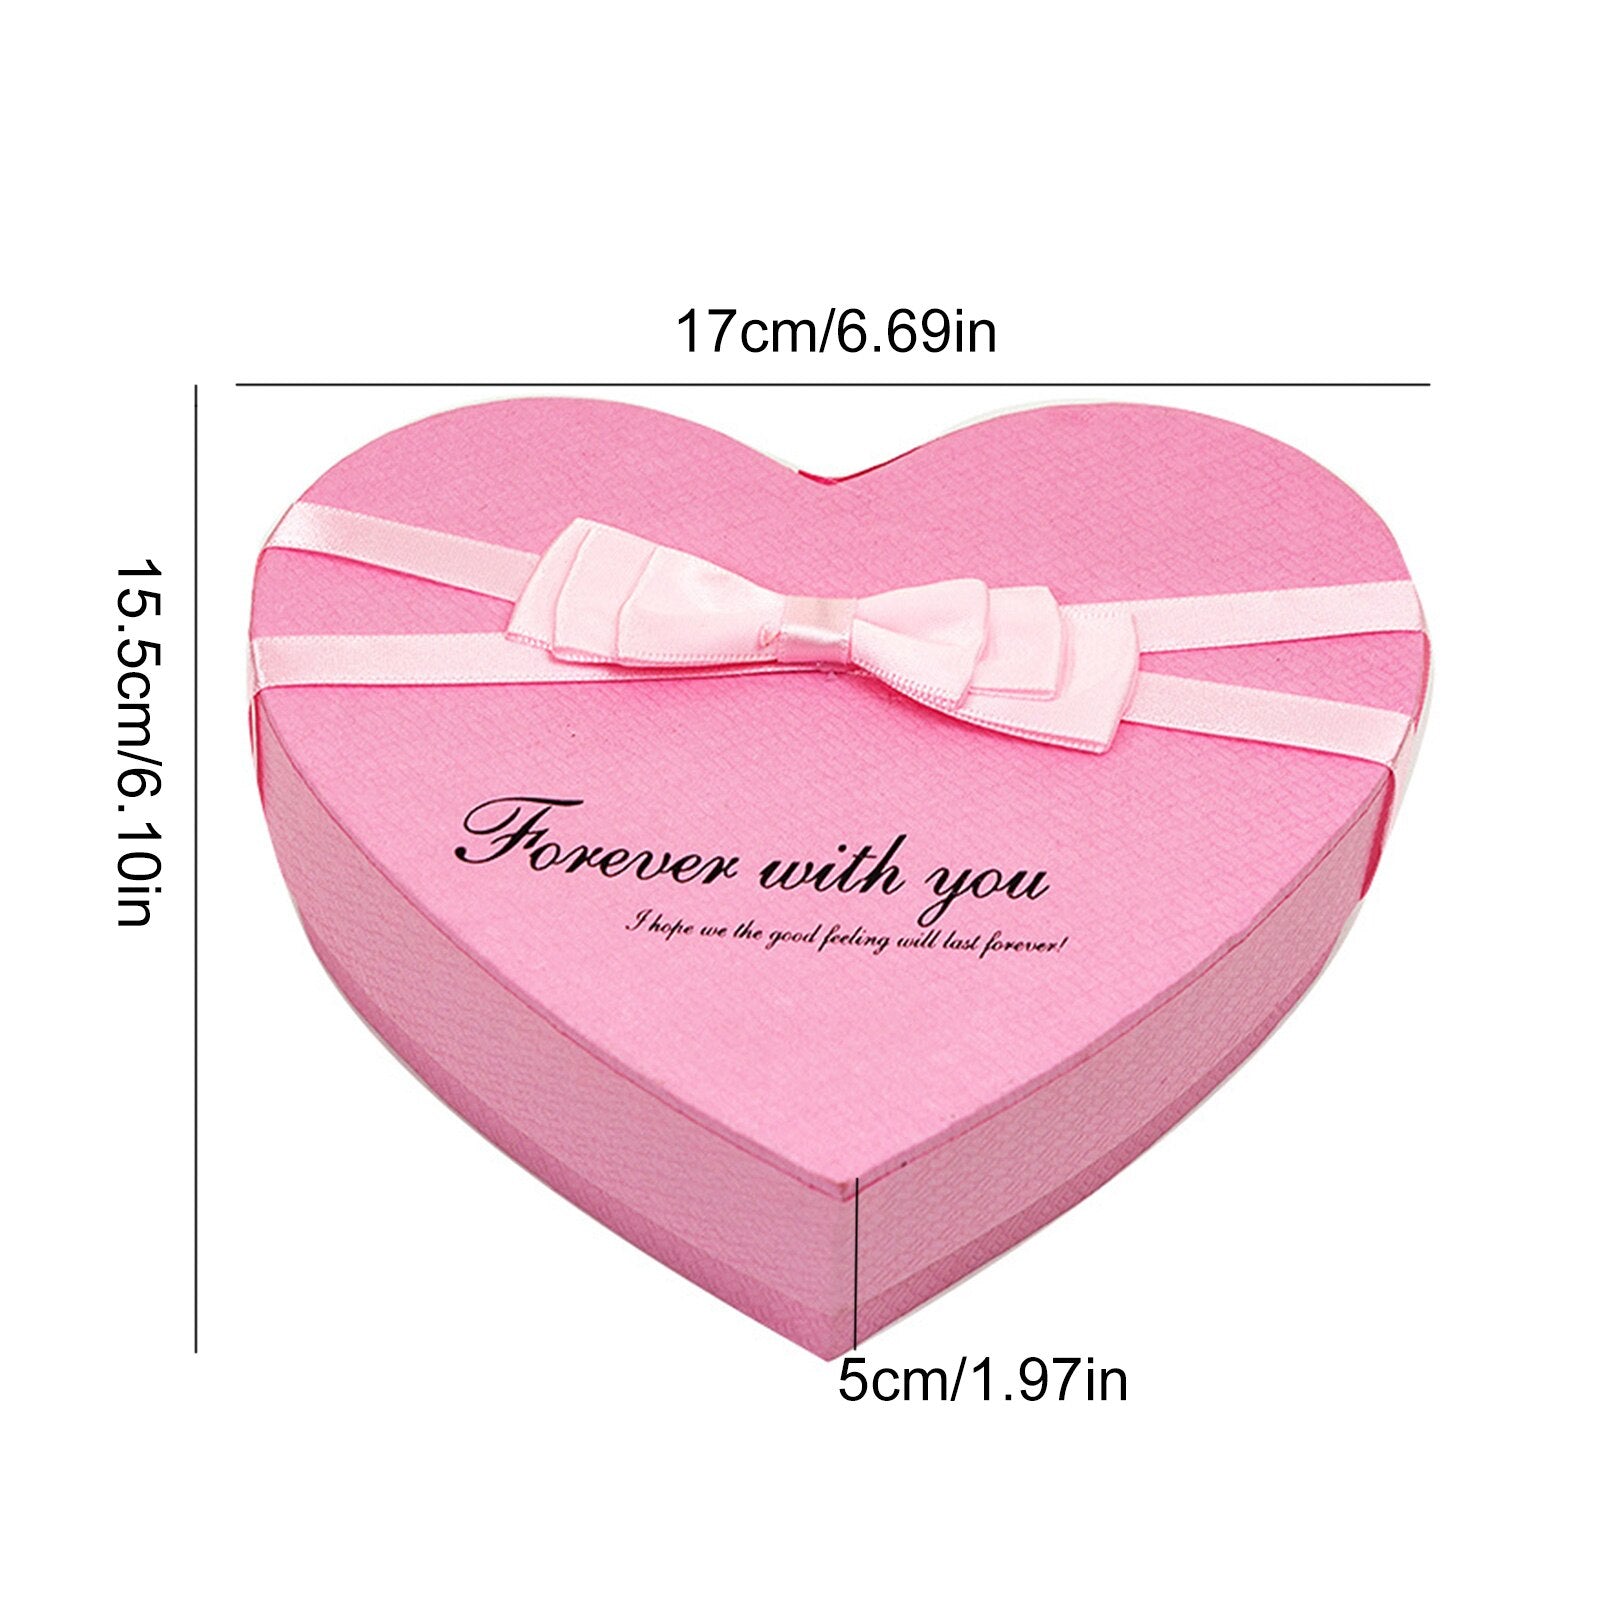 Heart-shaped Soap Flower Gift Box with Teddy Bear - Tortuna